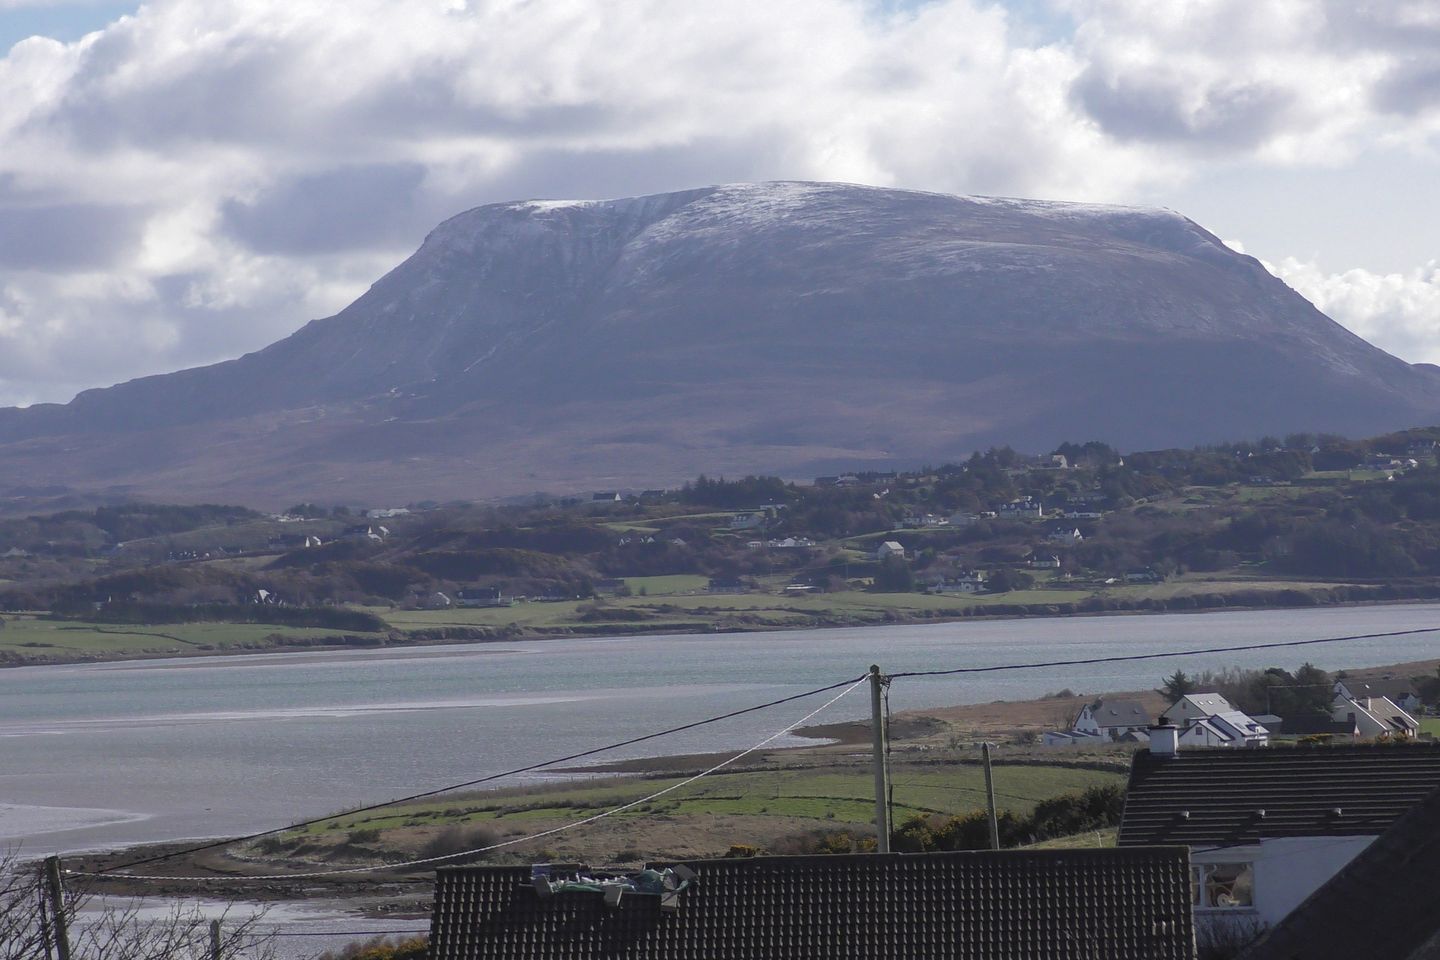 Muckish Mountain, Falcarragh, Co. Donegal